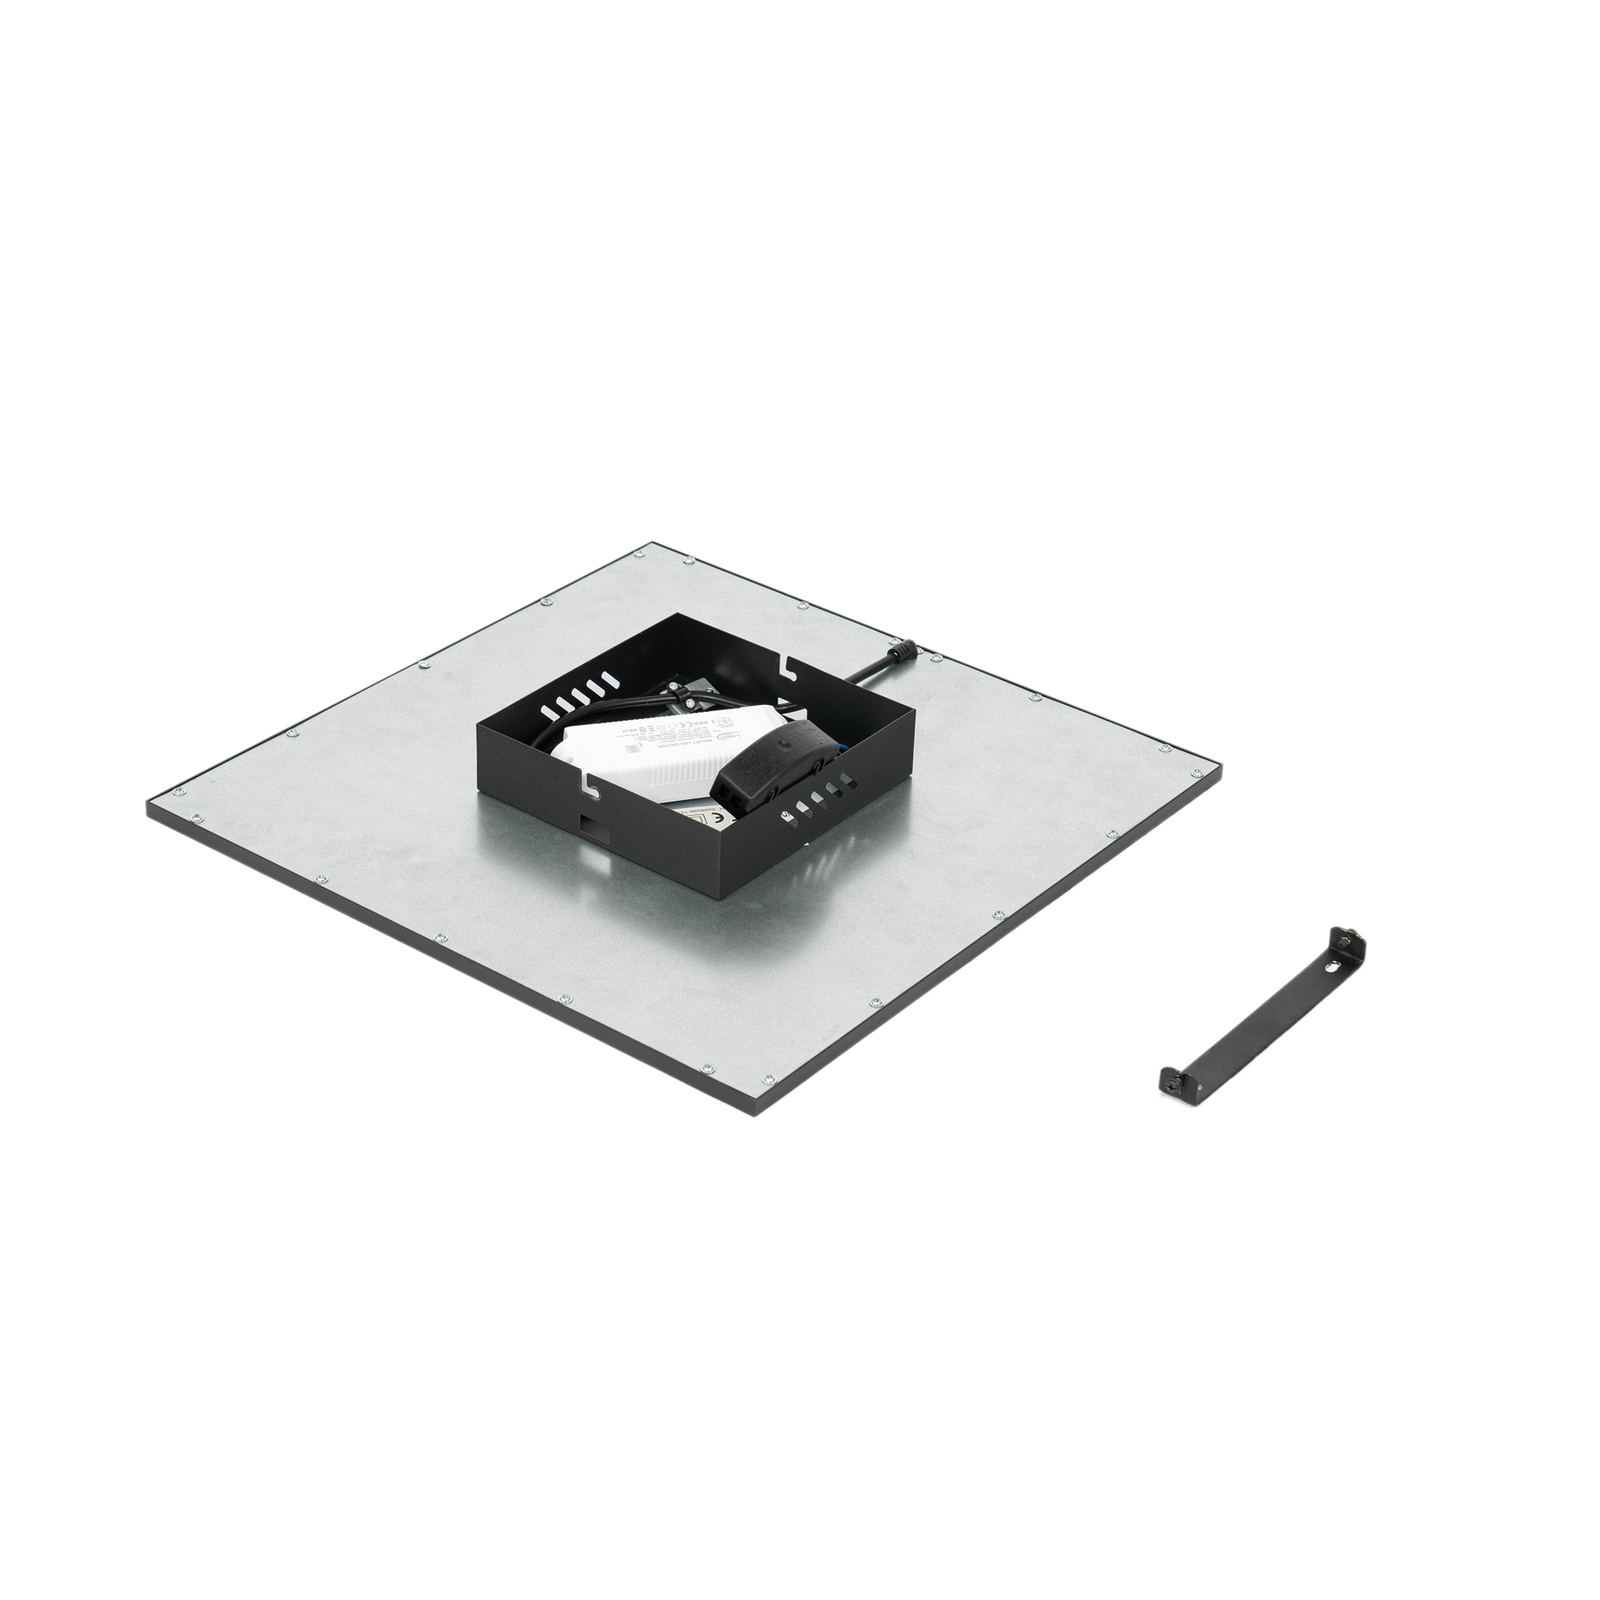 Lindby Lamin LED-Panel Quadrat schwarz 39,5 cm